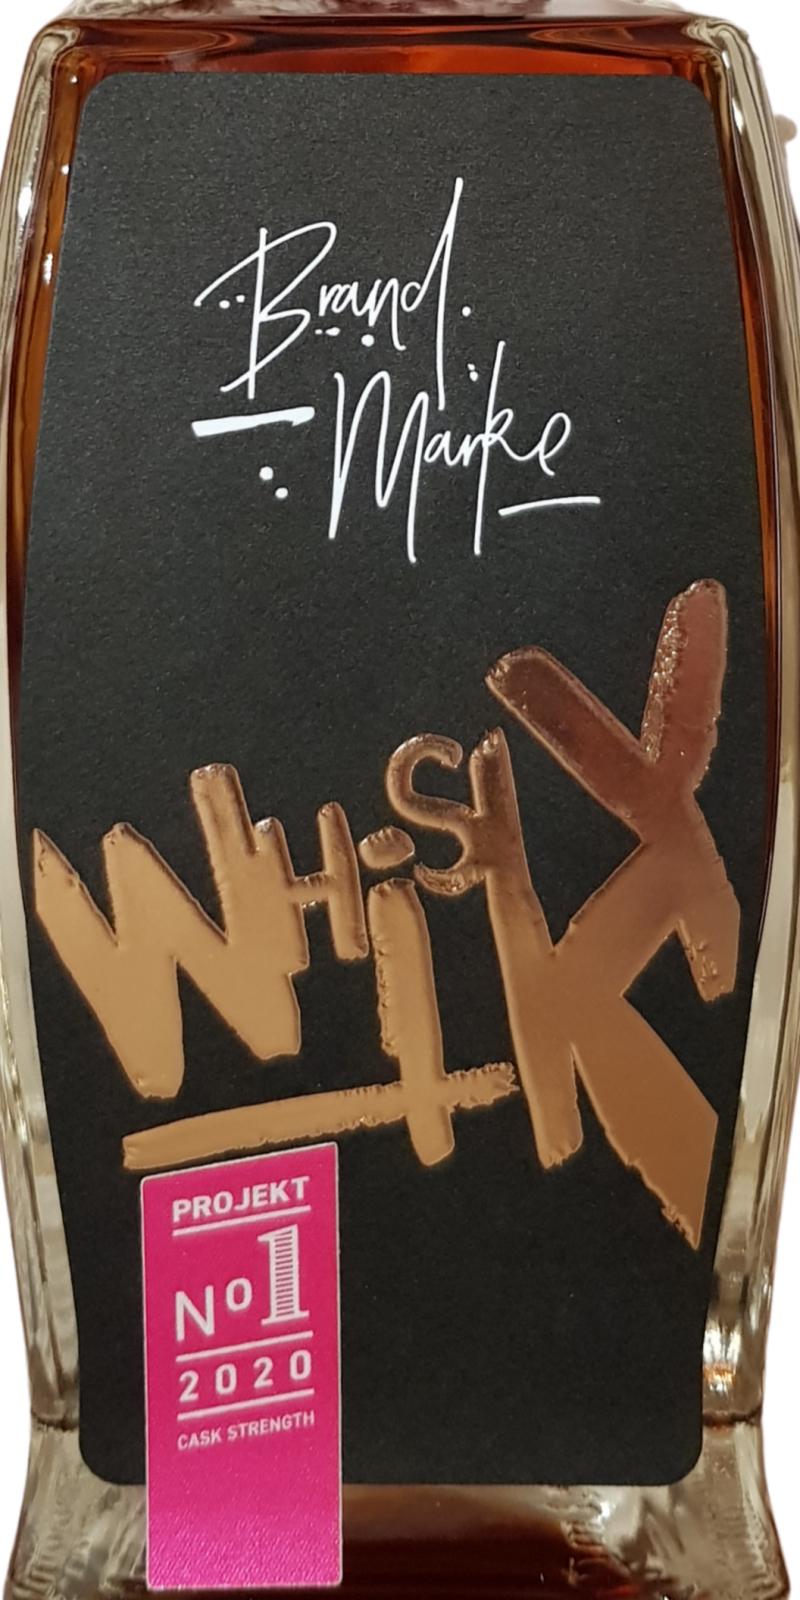 Brand Marke The Second Breakfast Whisky